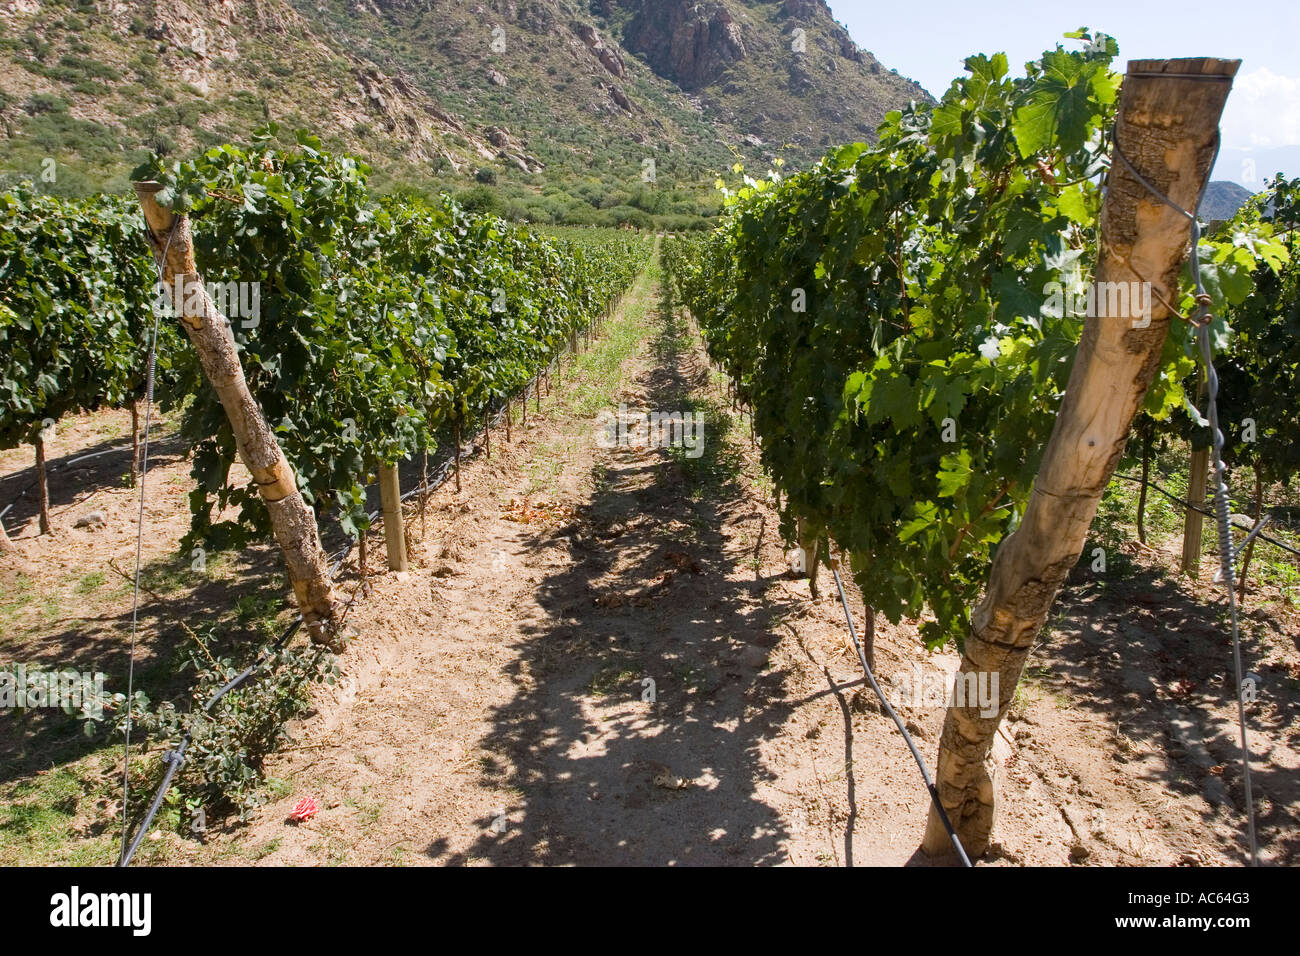 A vineyard in Cafayate, Salta, Argentina. Stock Photo